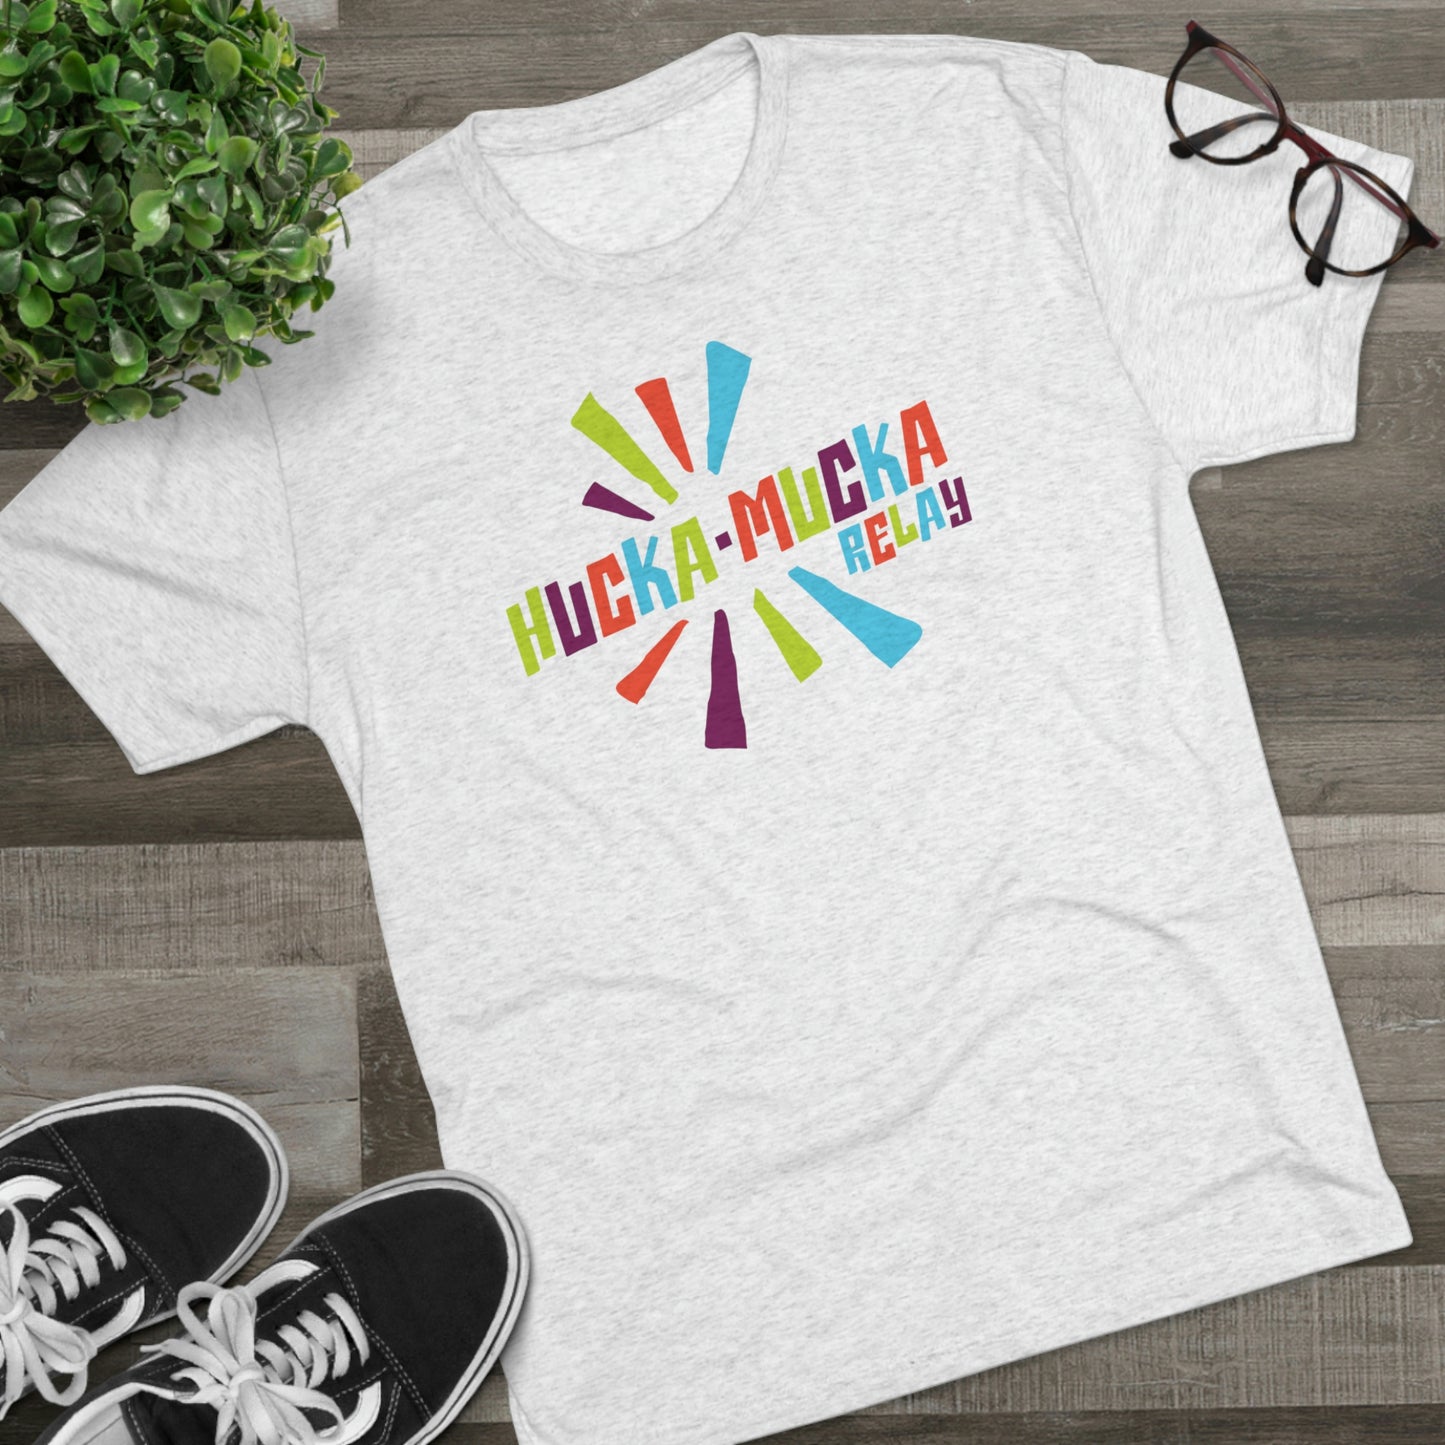 HUCKA-MUCKA / Organic Creator T-shirt - UnisexUnisex Tri-Blend Crew Tee